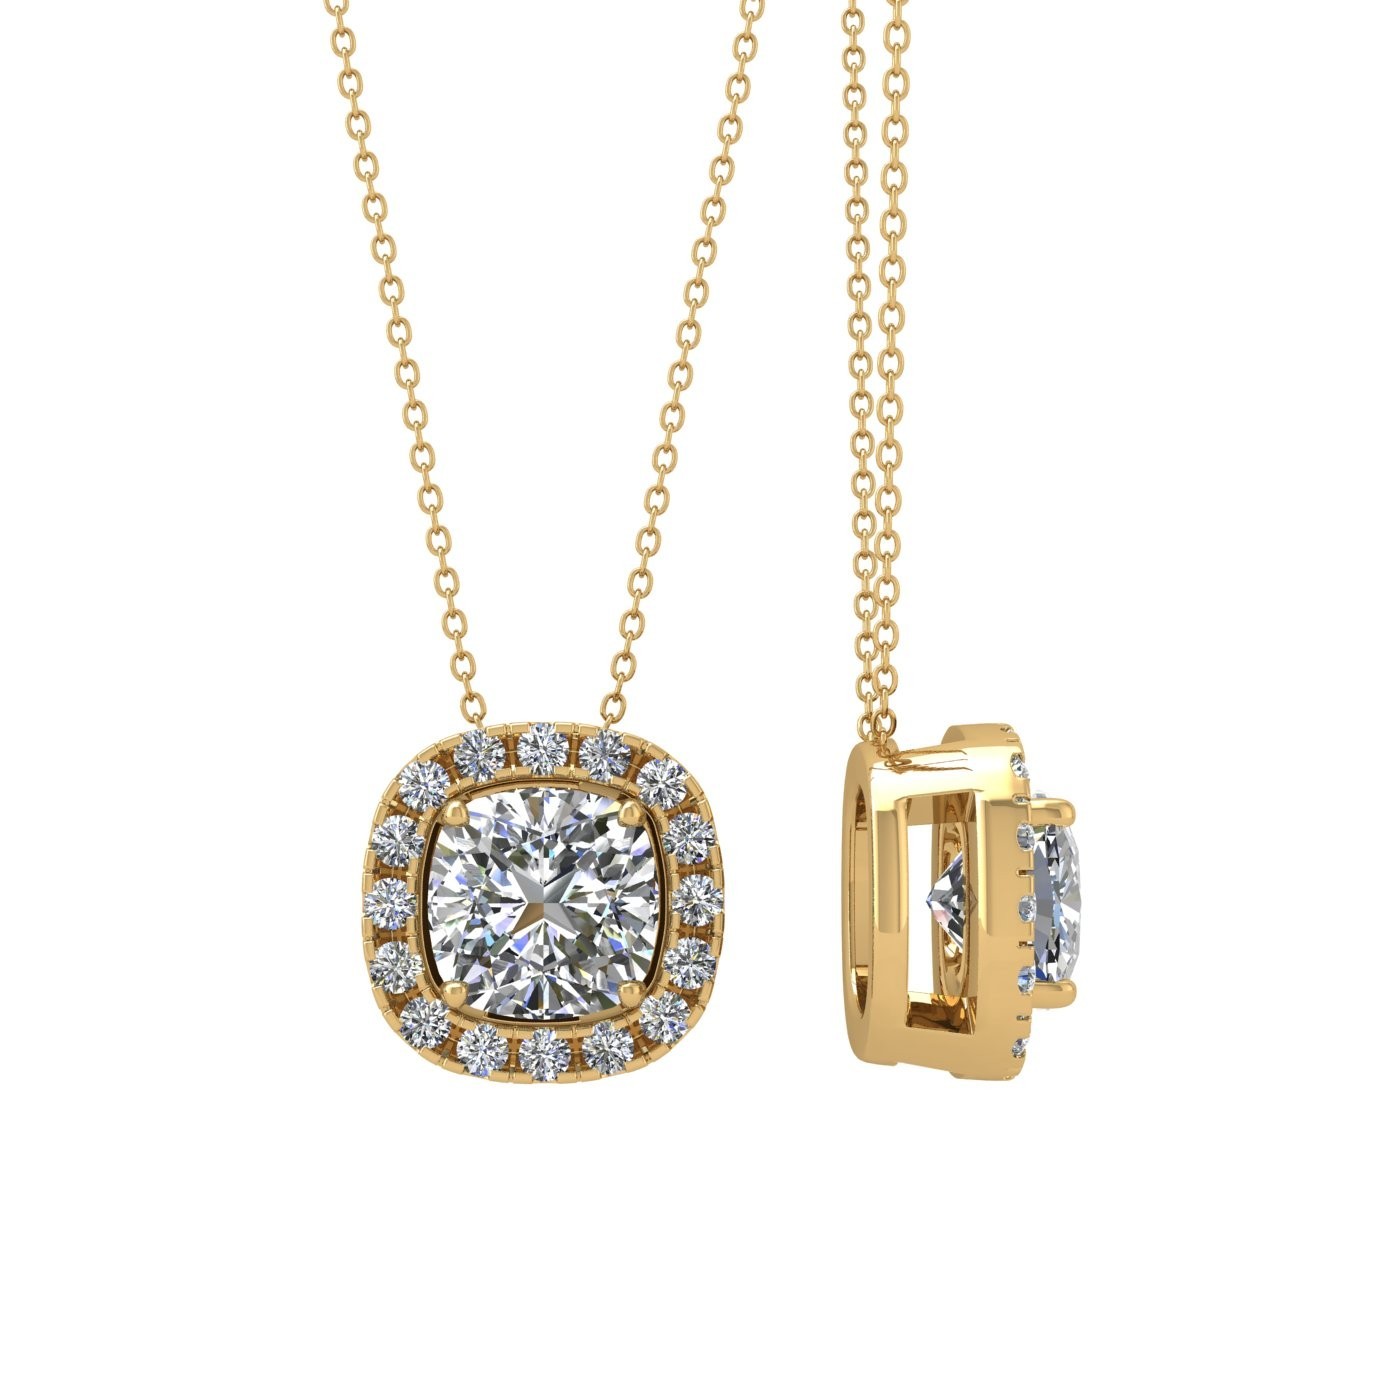 18k yellow gold 1 ct 4 prongs cushion shape diamond pendant with diamond pavÉ set halo